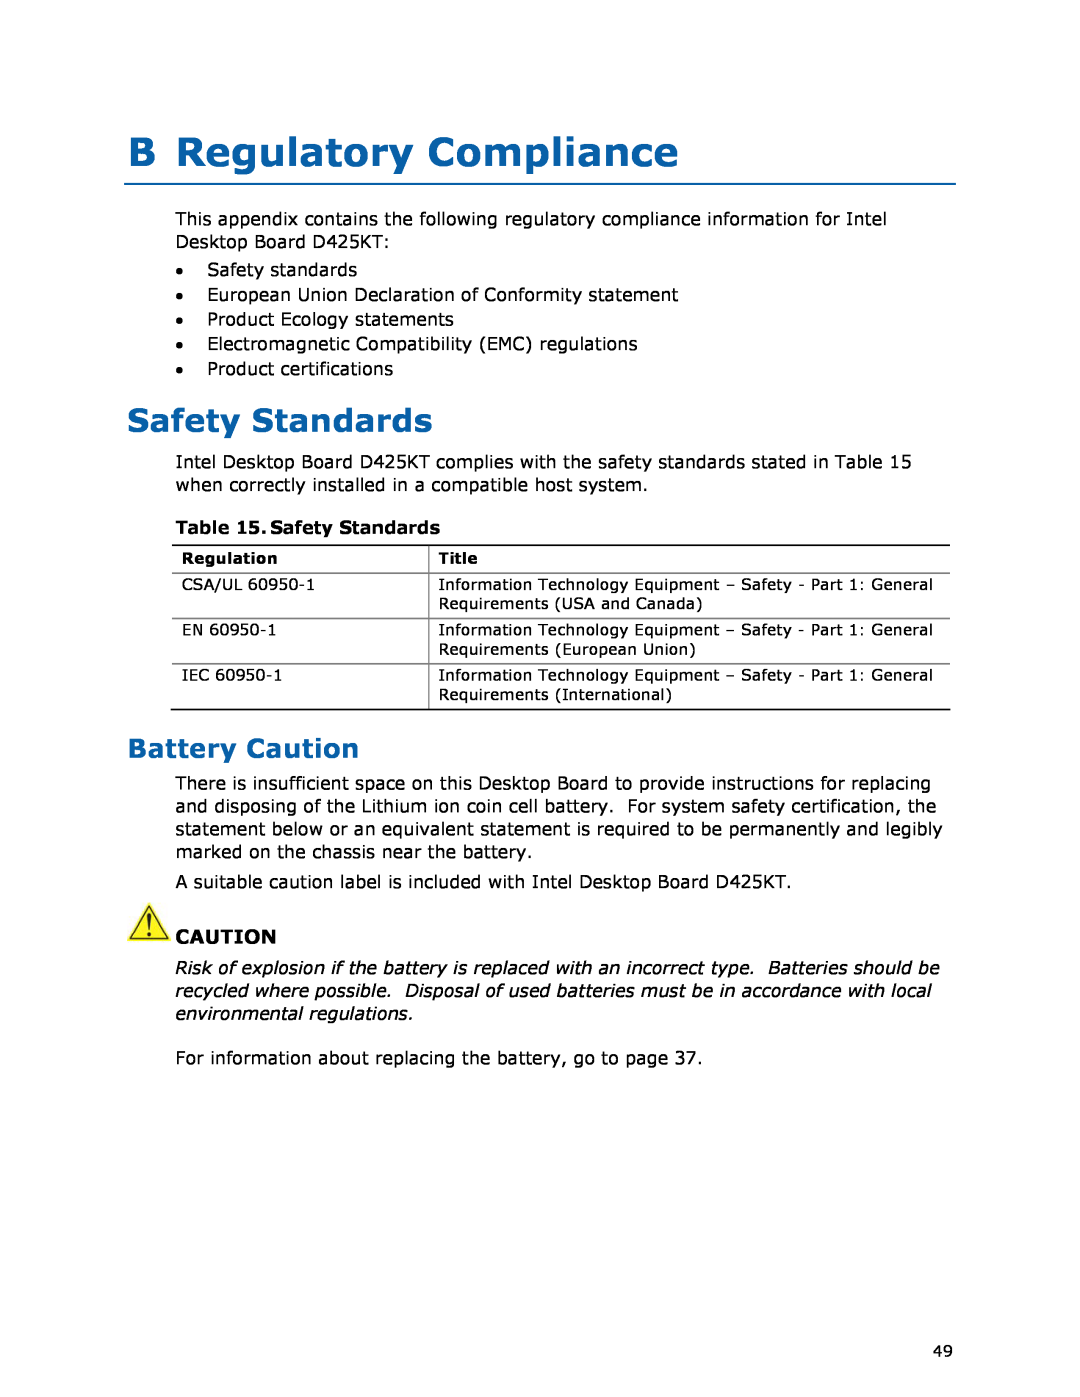 Intel D425KT manual B Regulatory Compliance, Safety Standards, Battery Caution 